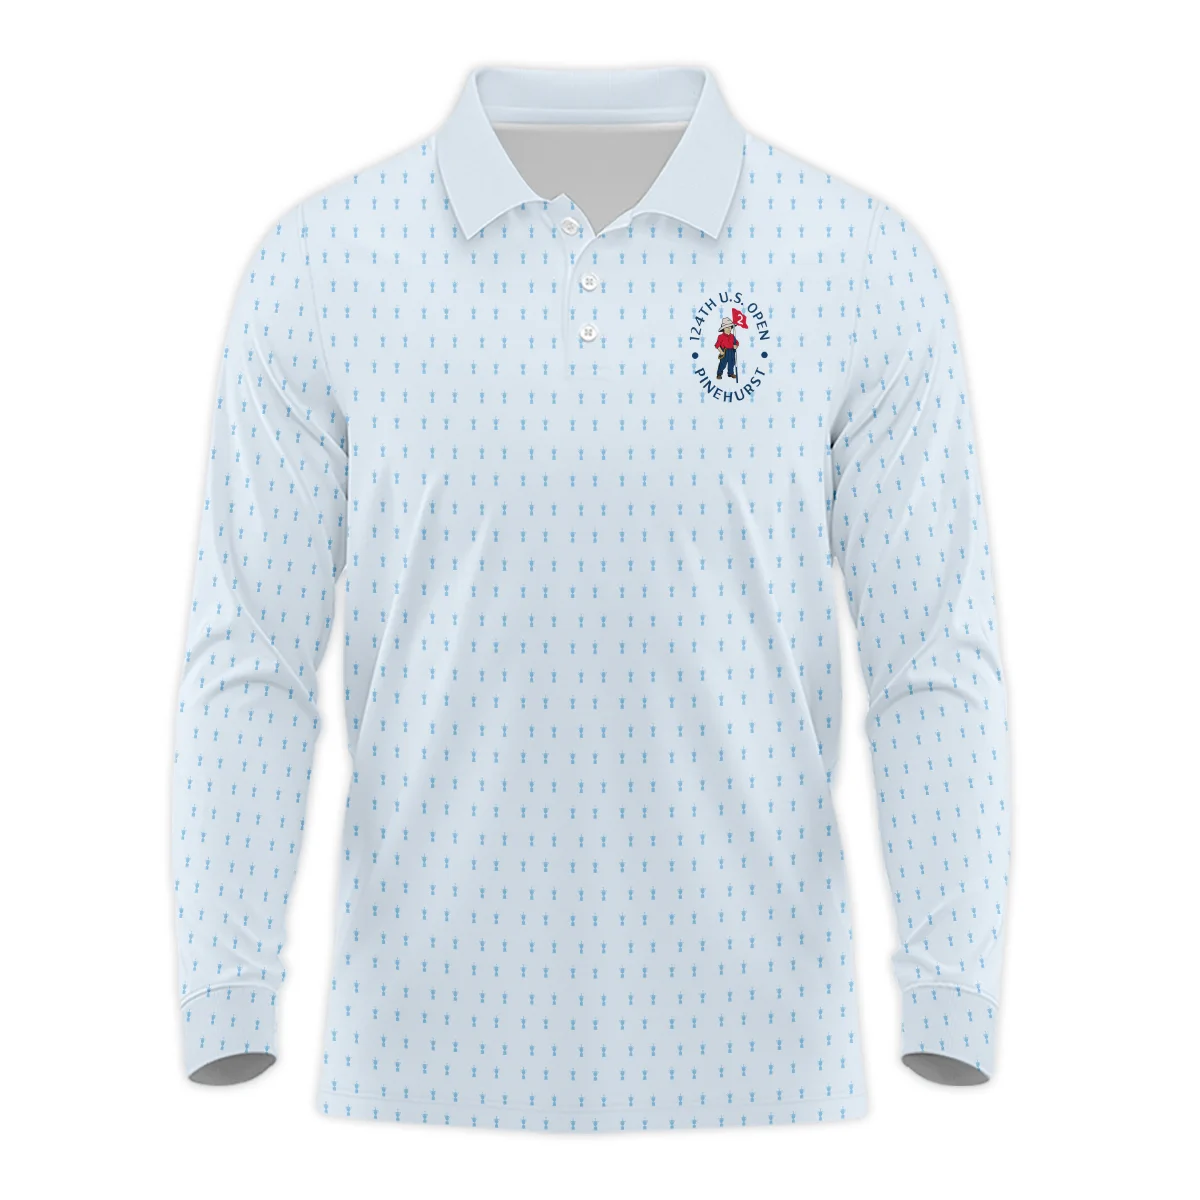 Golf Pattern Cup Light Blue Green 124th U.S. Open Pinehurst Unisex T-Shirt Style Classic T-Shirt